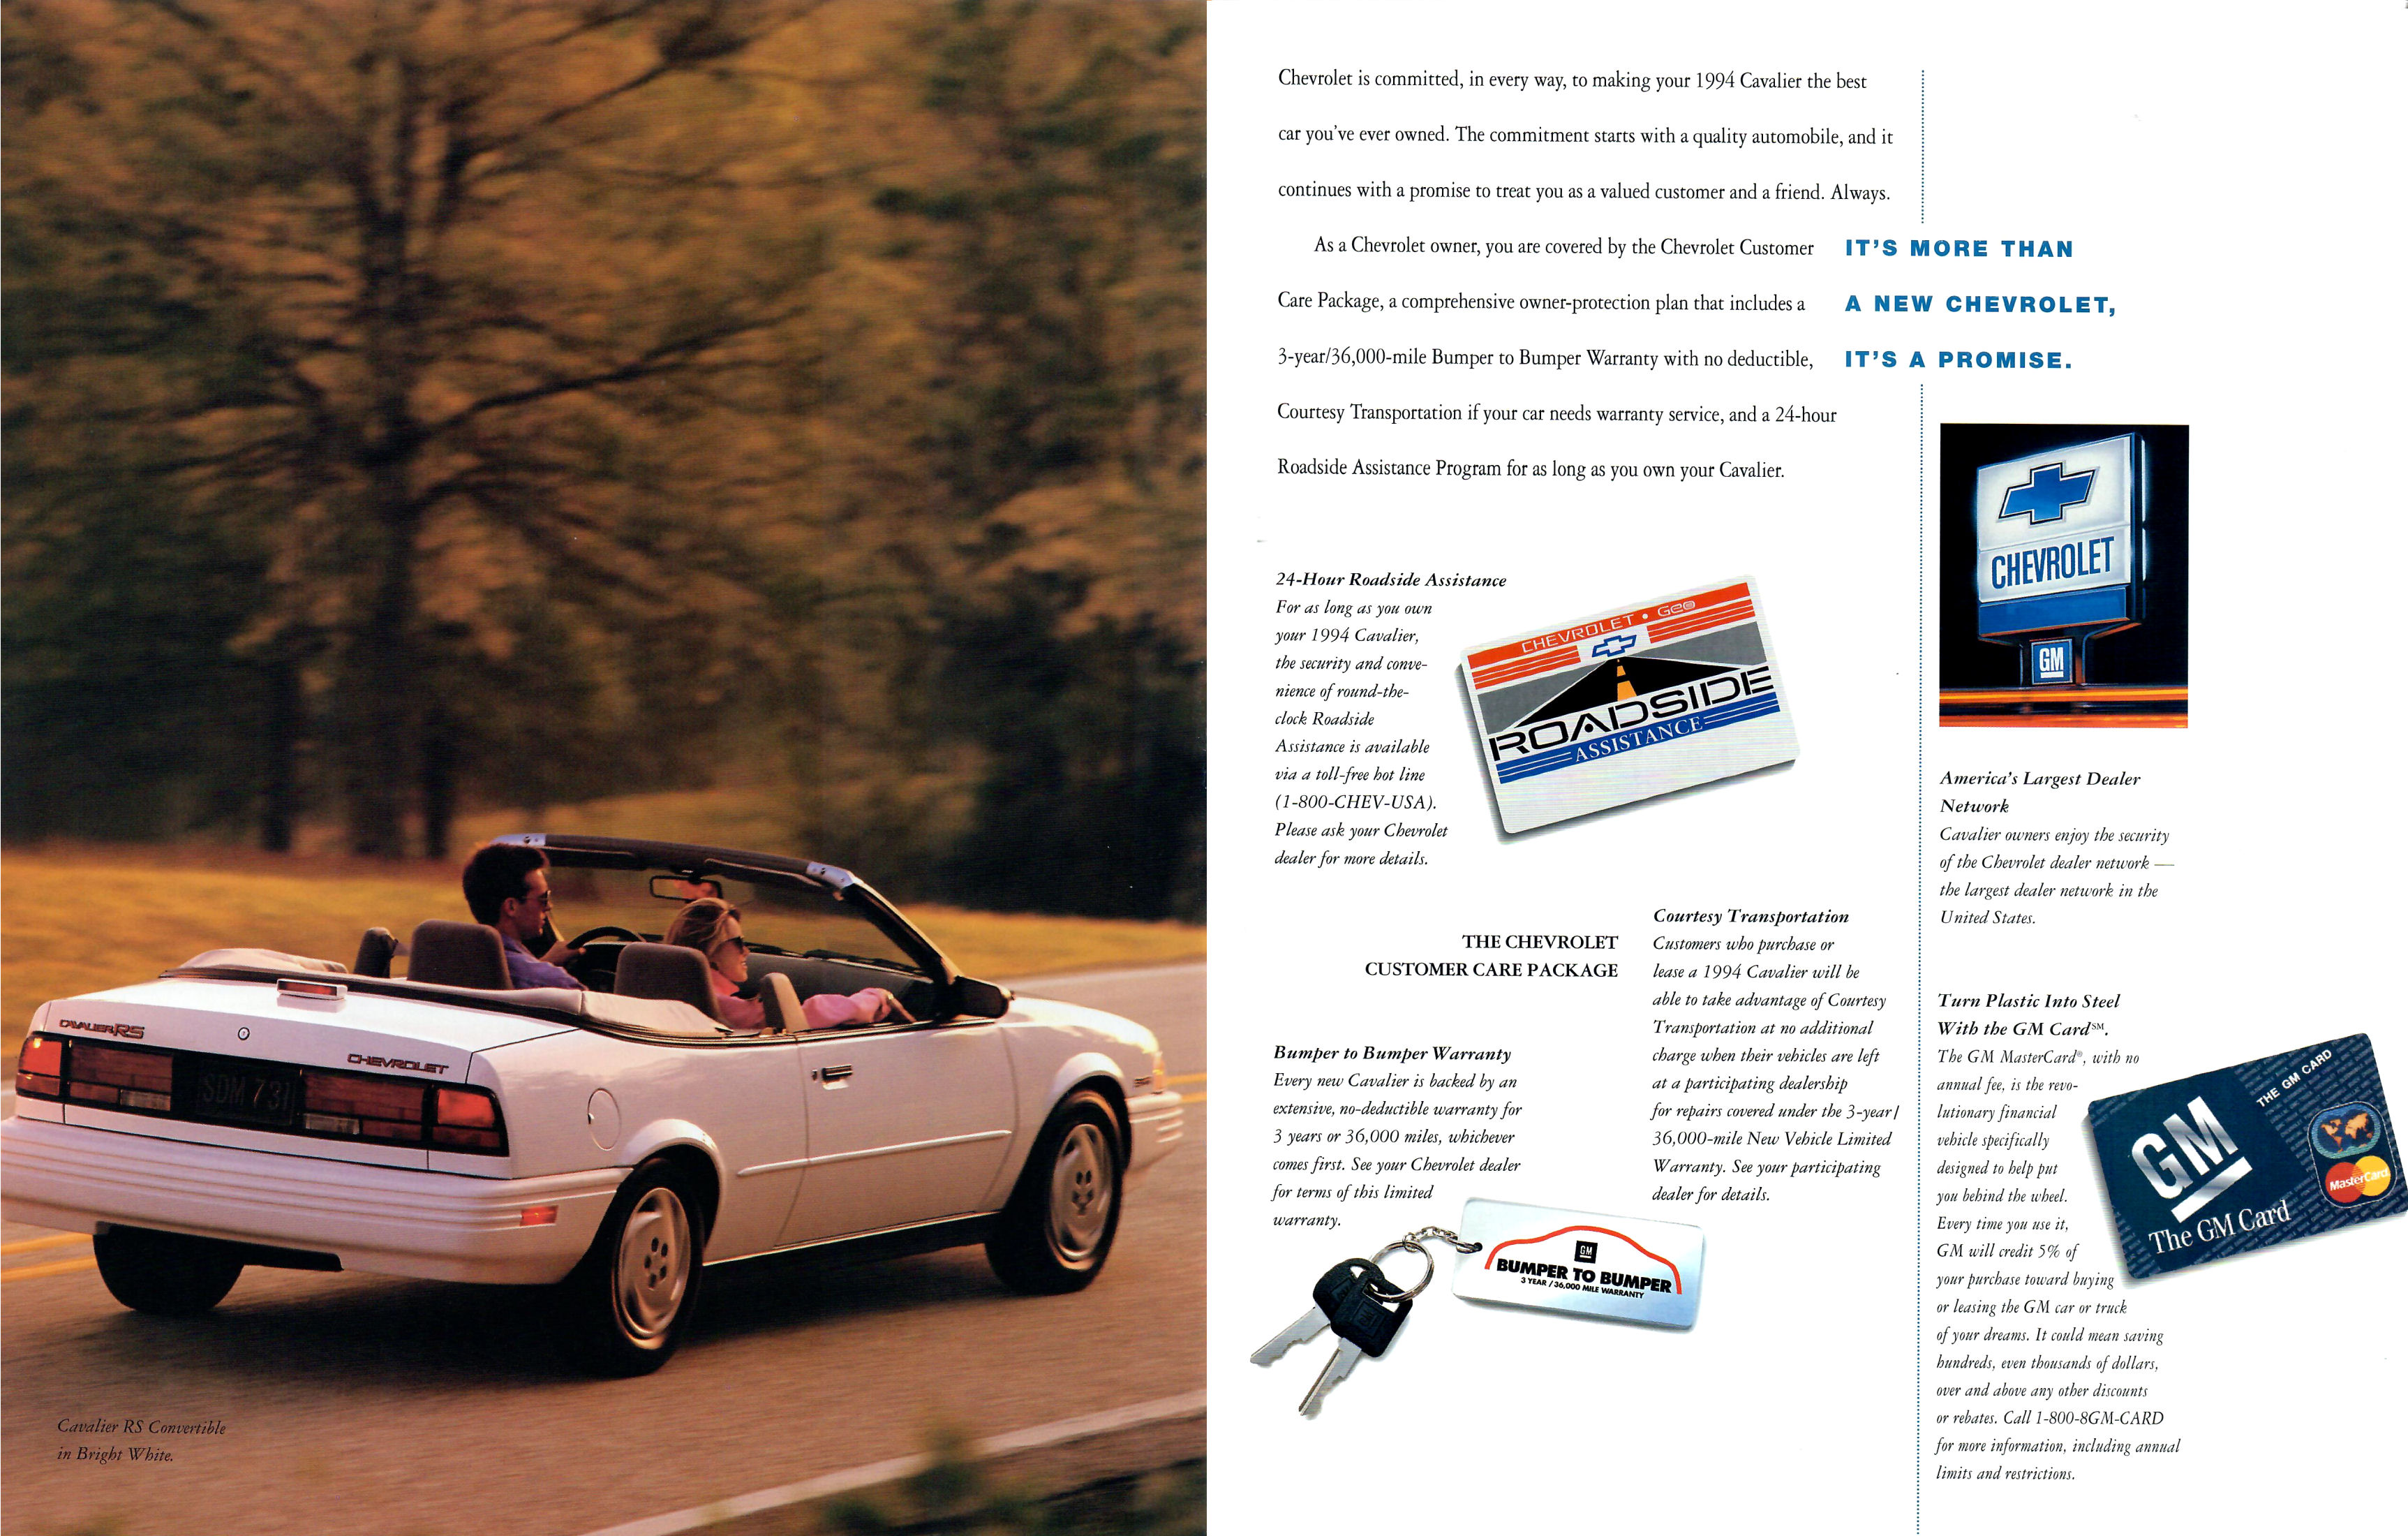 1994 Chevrolet Cavalier-08-09